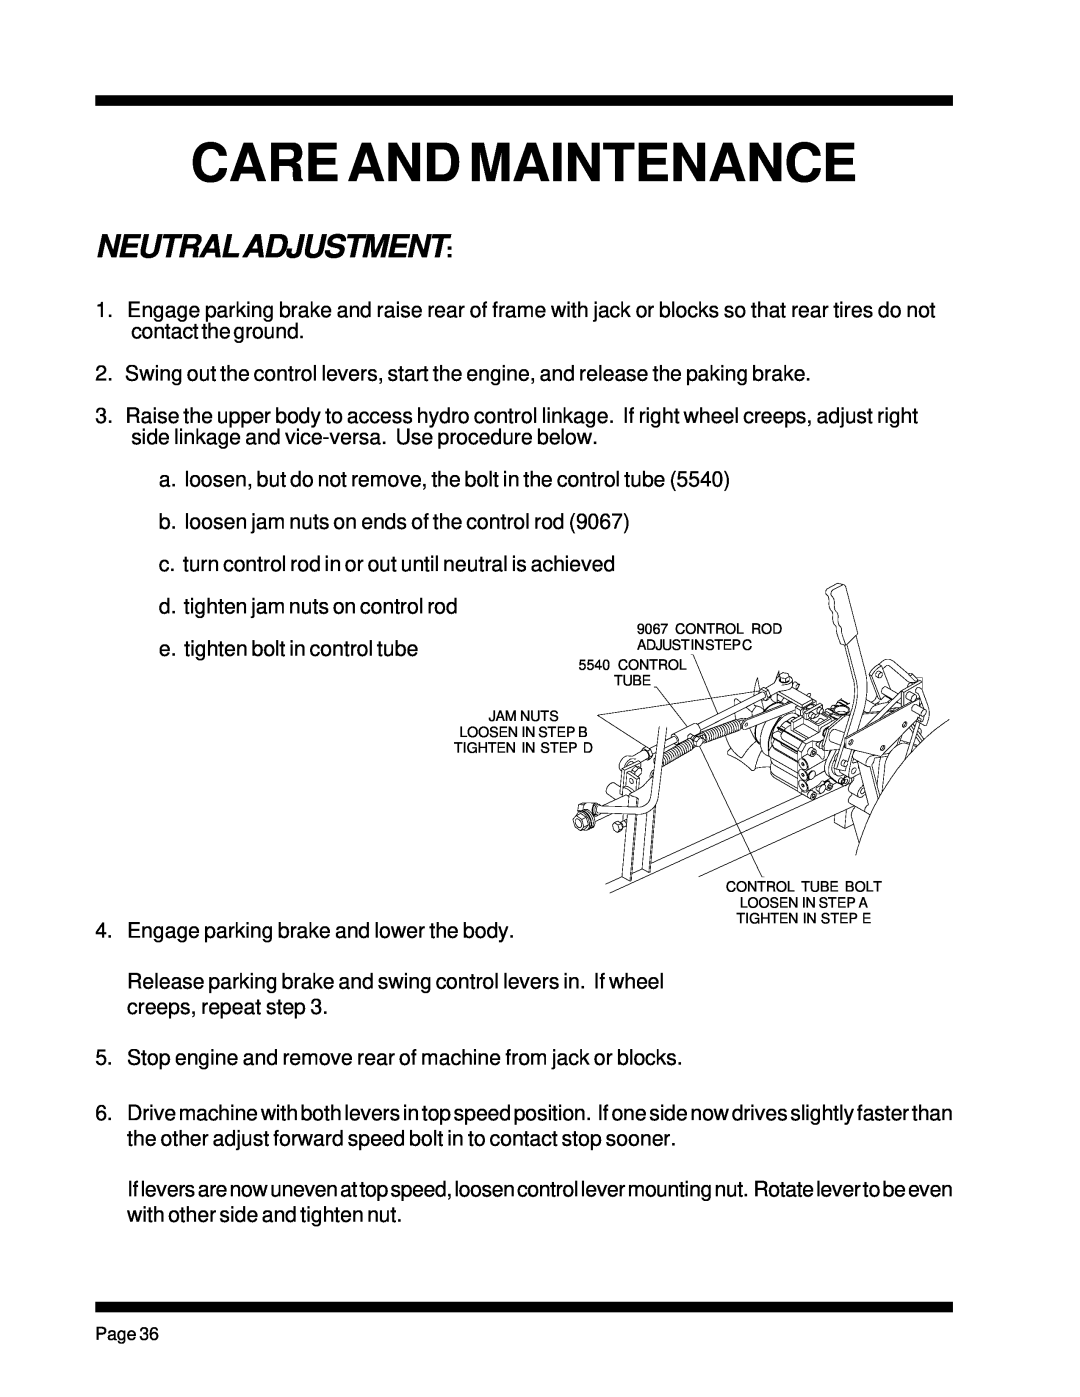 Dixon ZTR 5023, ZTR 5425 manual Neutraladjustment, Care And Maintenance 